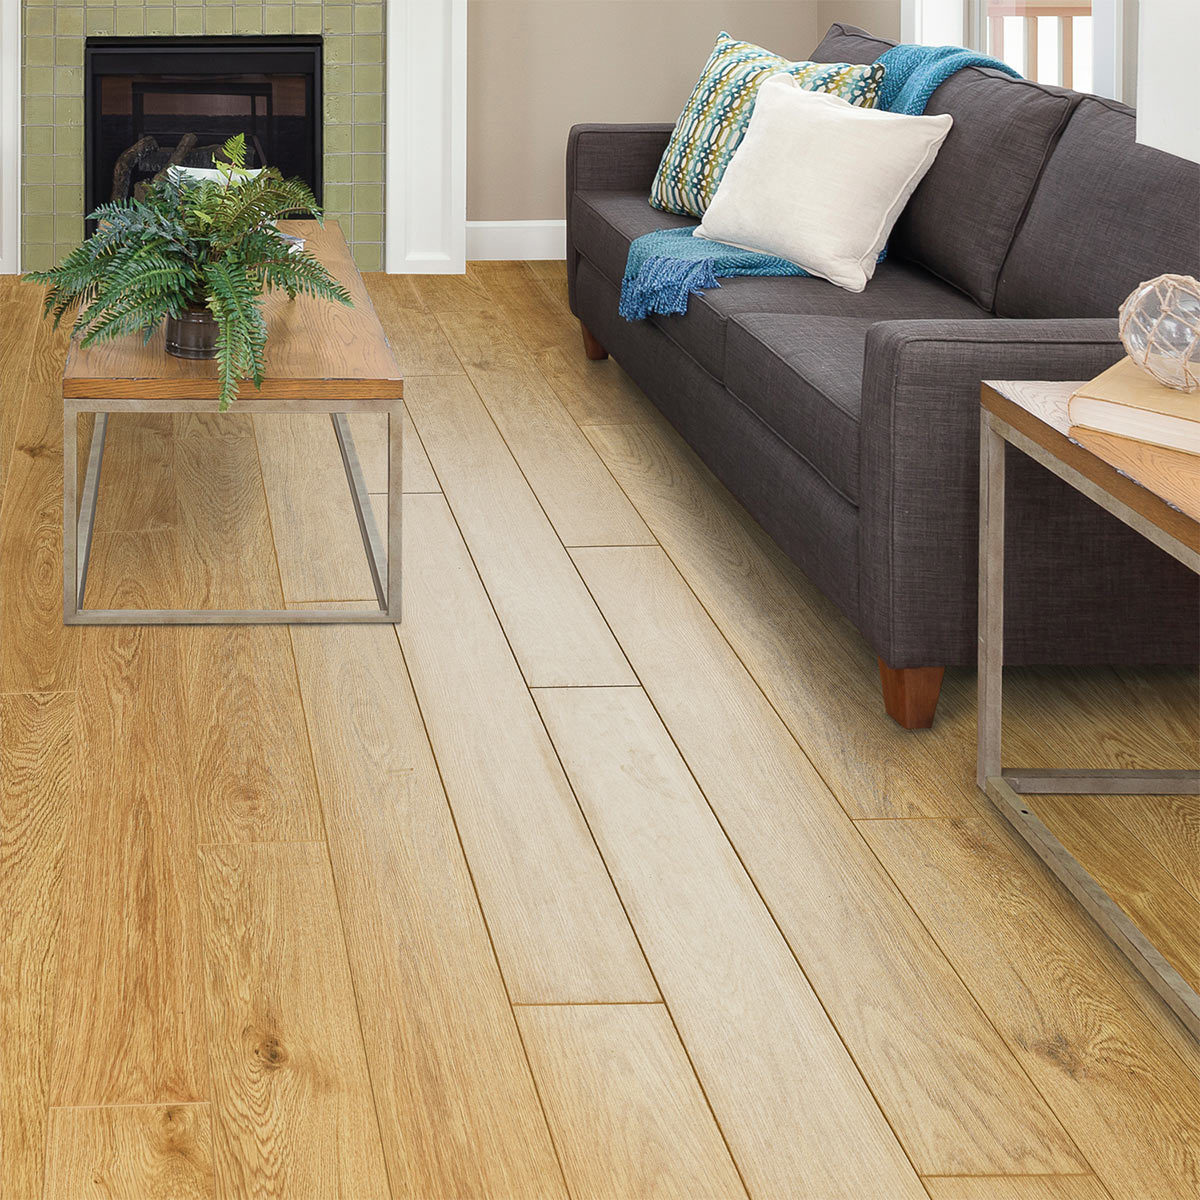 Golden Select Nottingham Oak Laminate, Most Realistic Laminate Flooring Uk